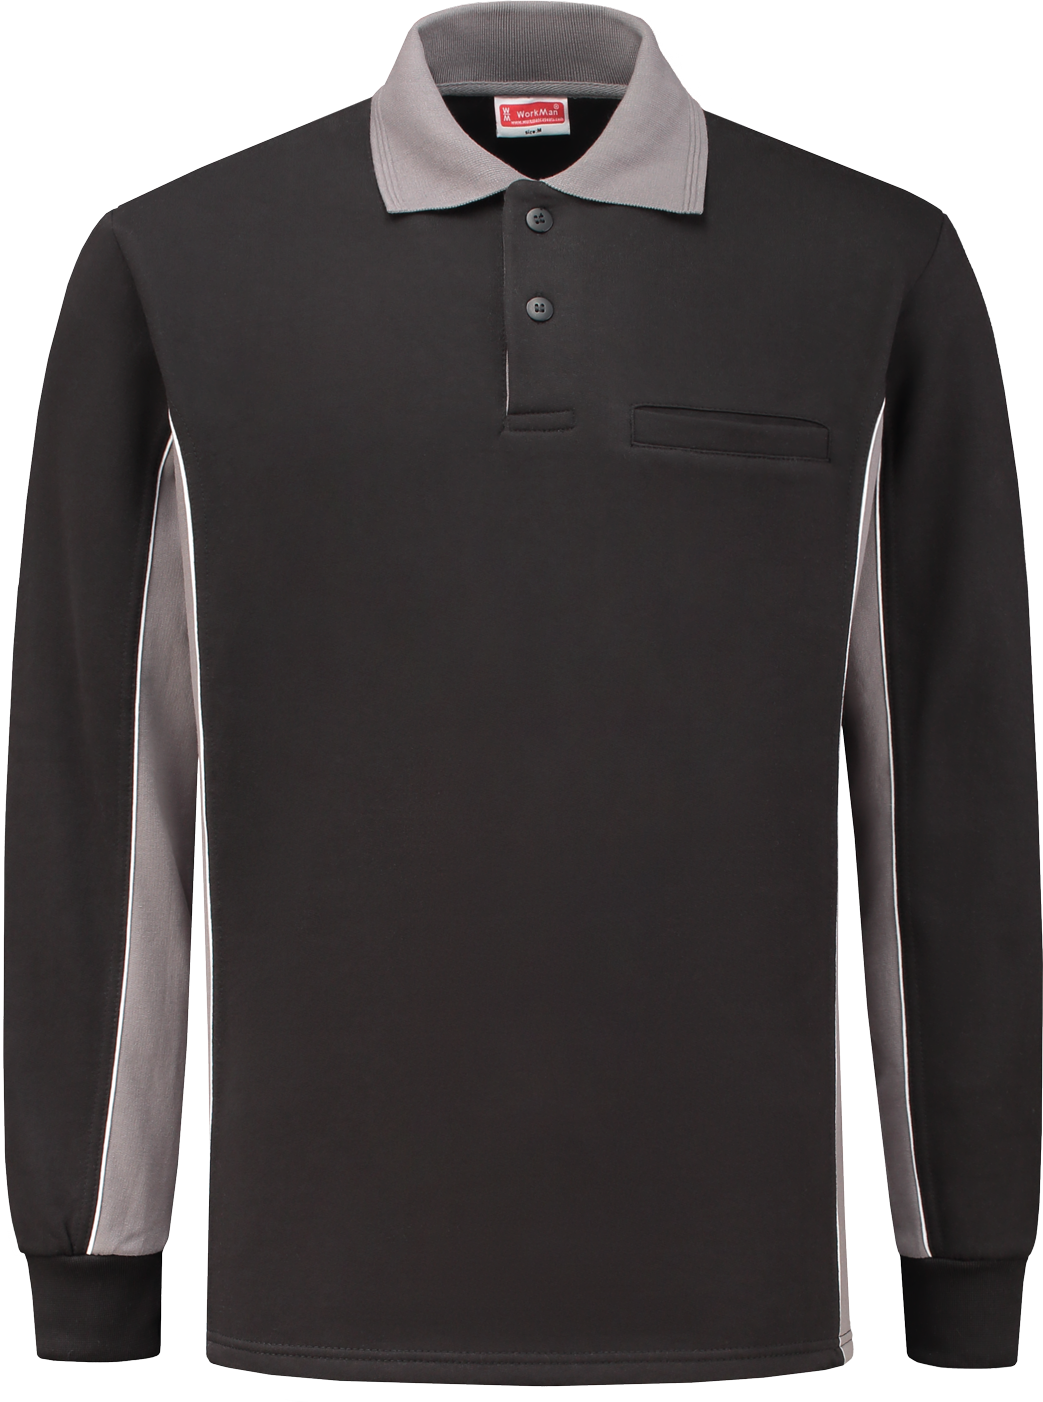 10.6.2406.02 2406 Polosweater Bi-Colour Zwart / Grijs M